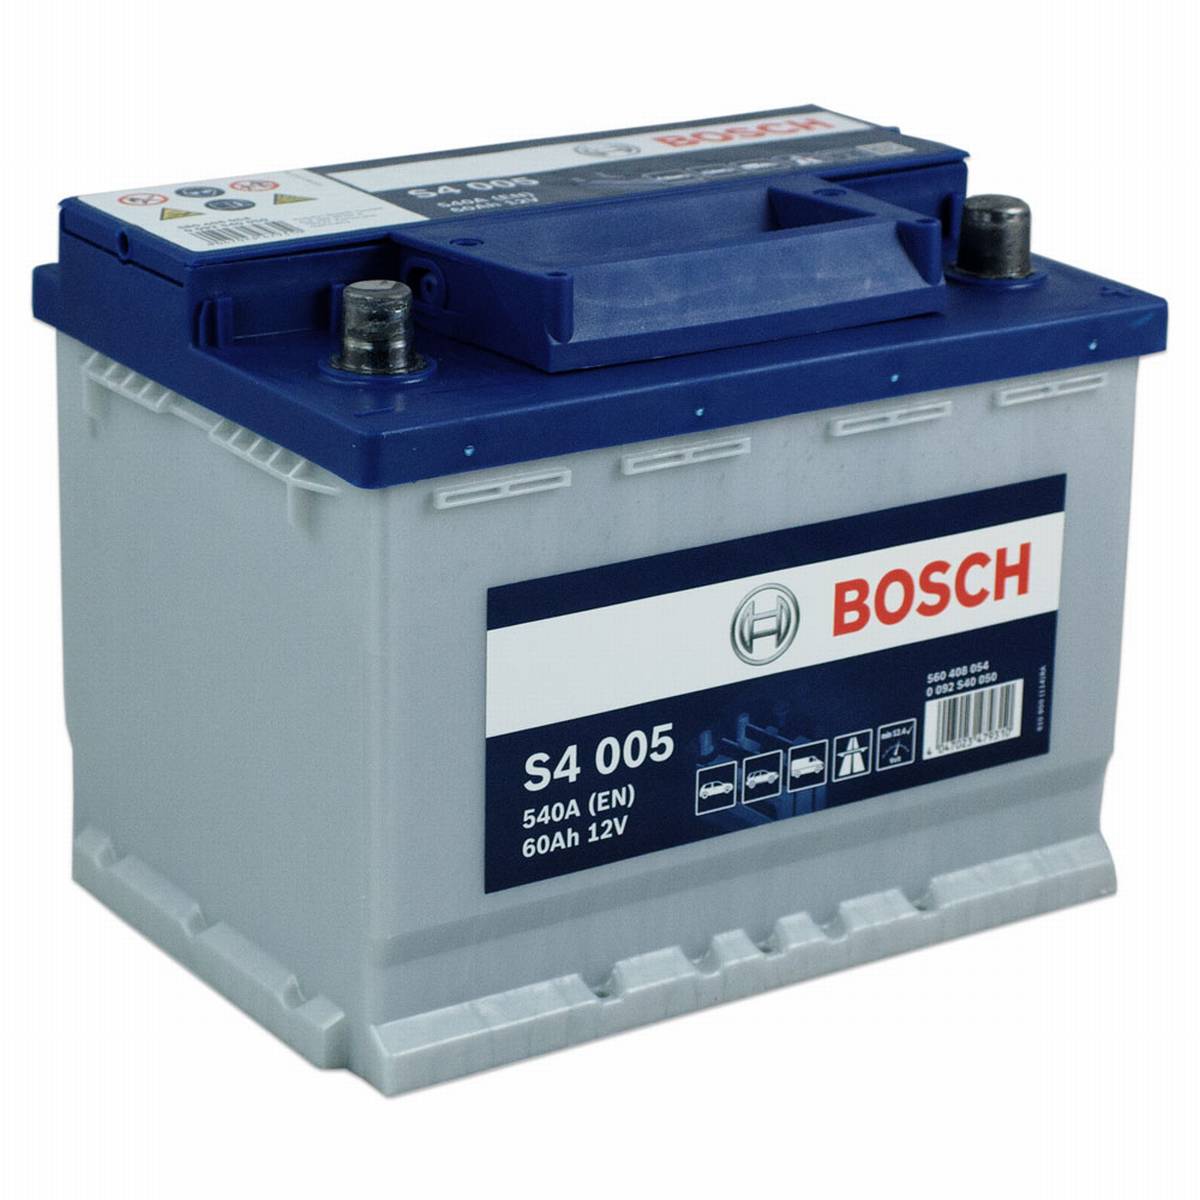 Bosch S4 005 Autobatterie 12V 60Ah 540A, Starterbatterie, Boot, Batterien für